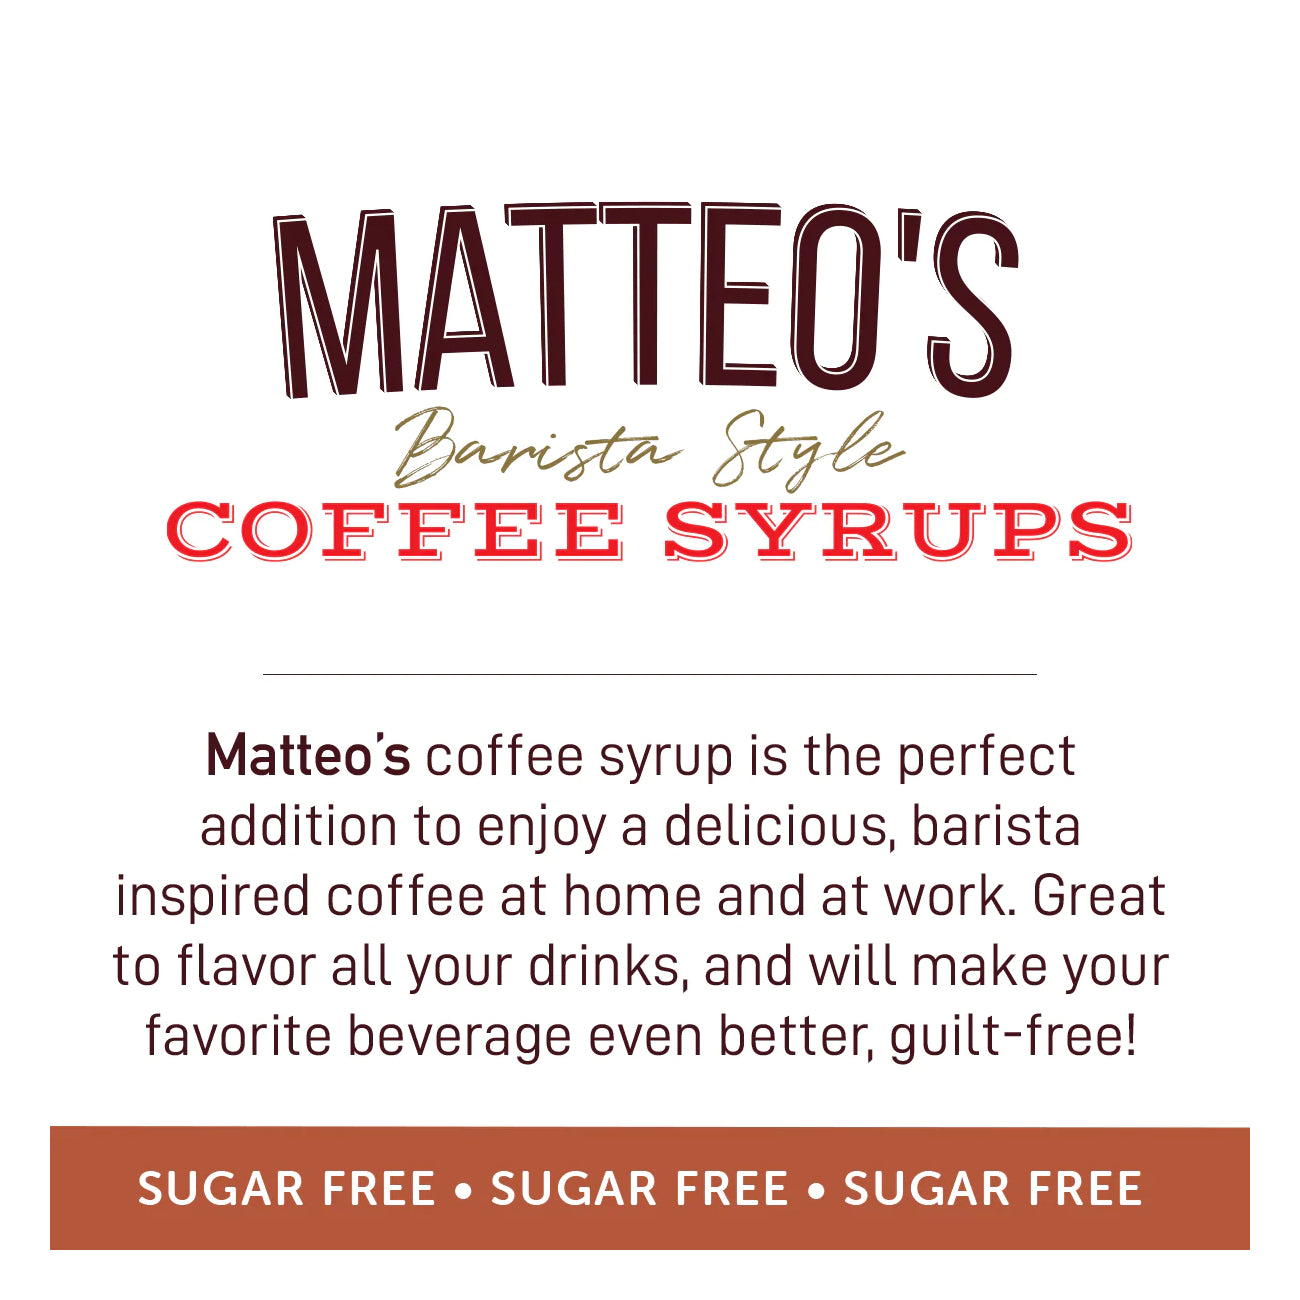 Matteo's Coffee Syrup Sugar Free Pumpkin Cheesecake / 750ml